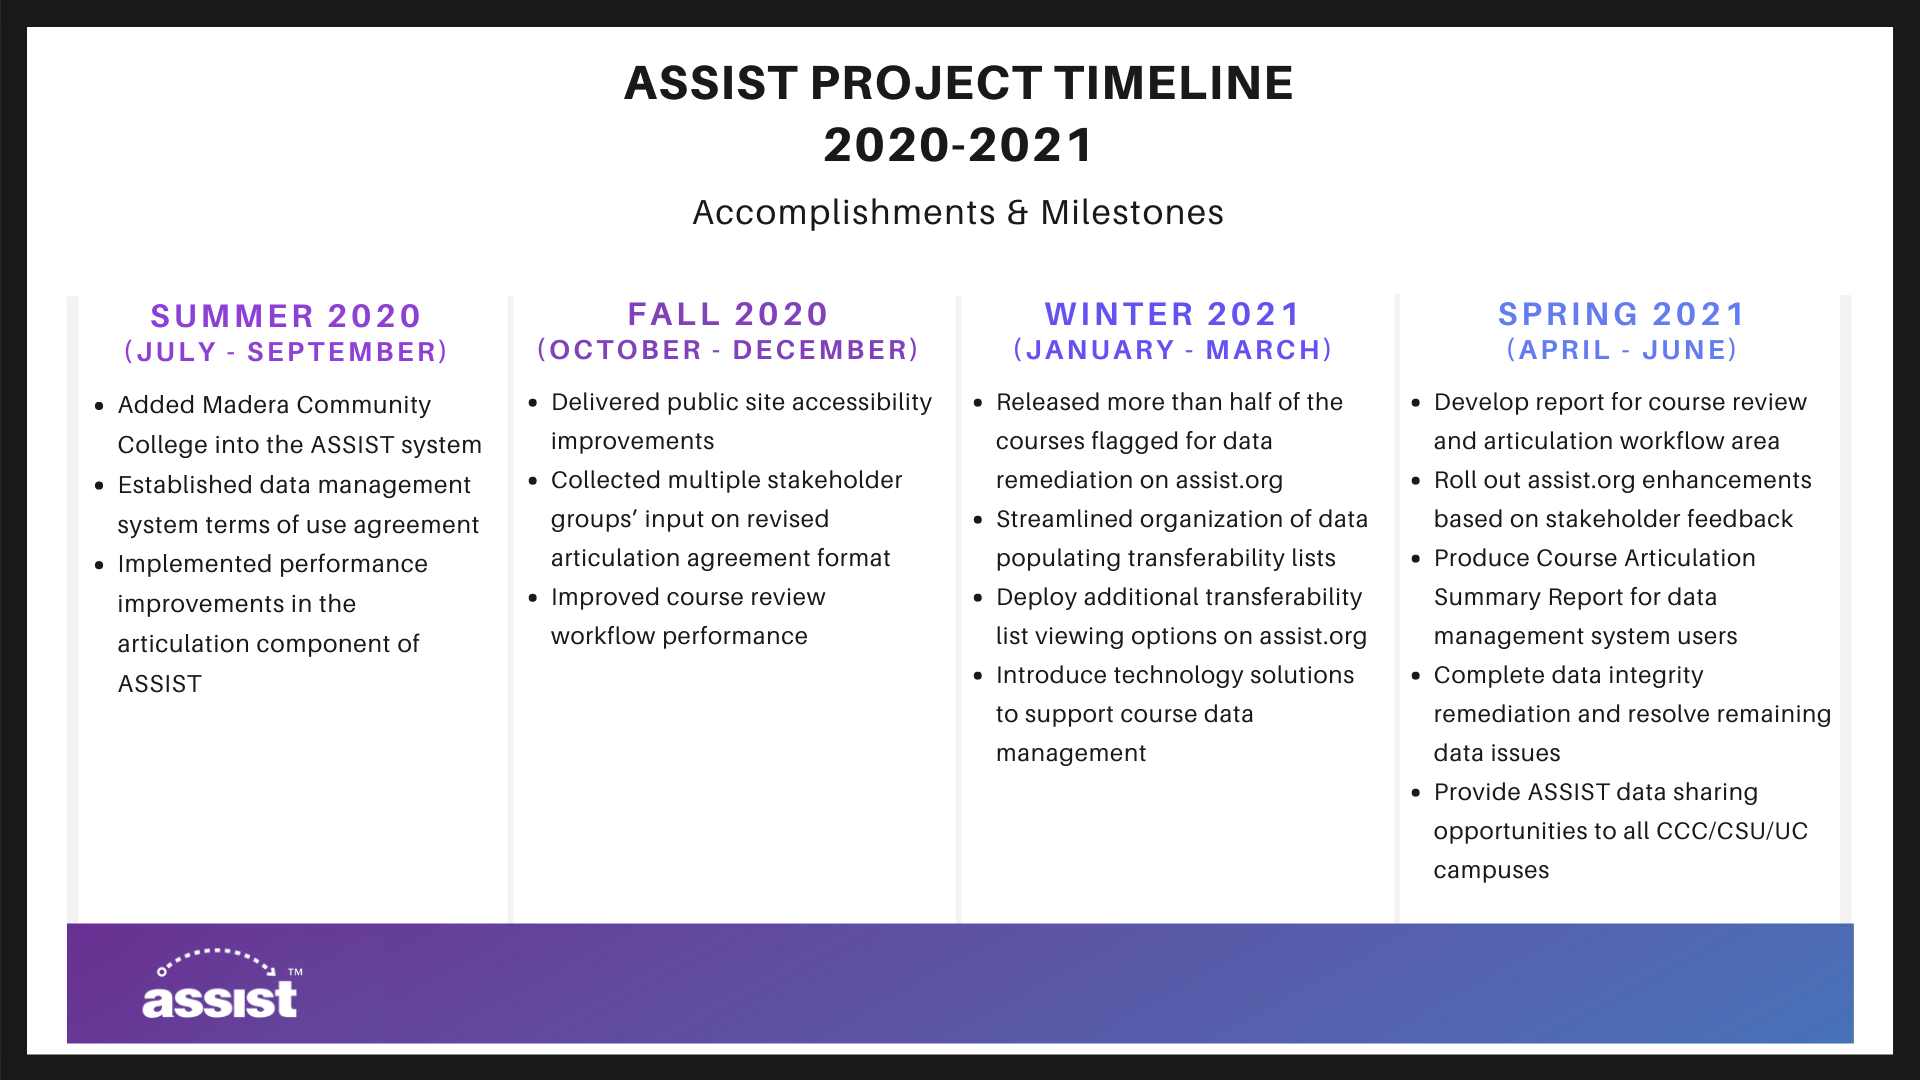 ASSIST Project Timeline - July 2020 through June 2021